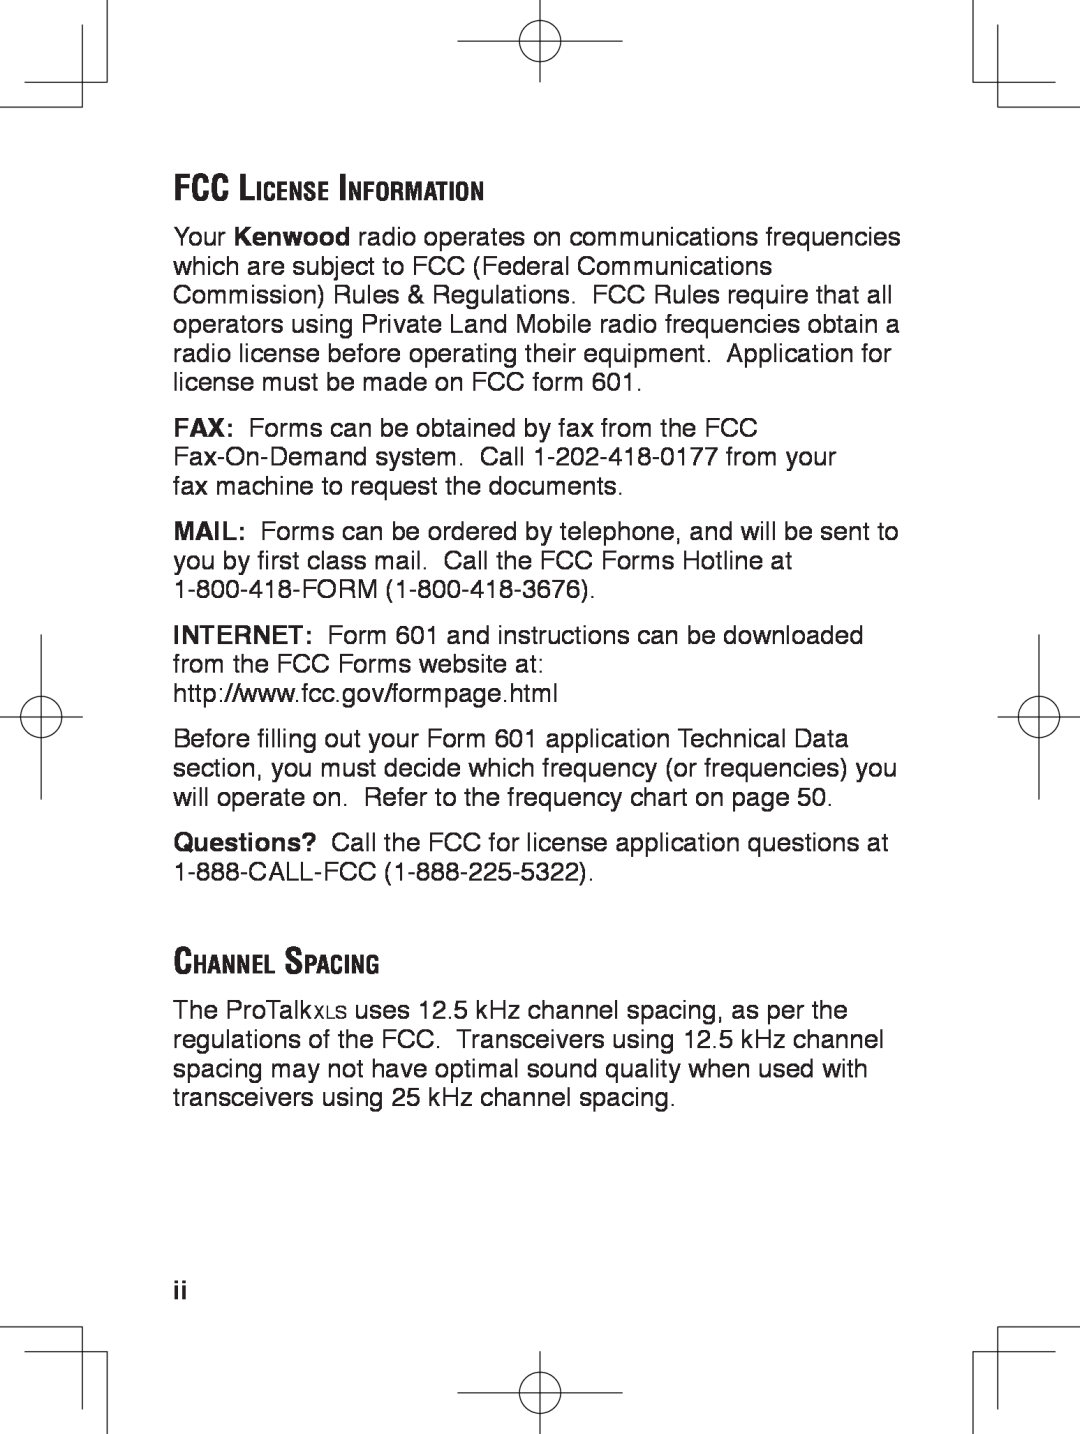 Kenwood TK-3230 instruction manual FCC License Information, Channel Spacing 